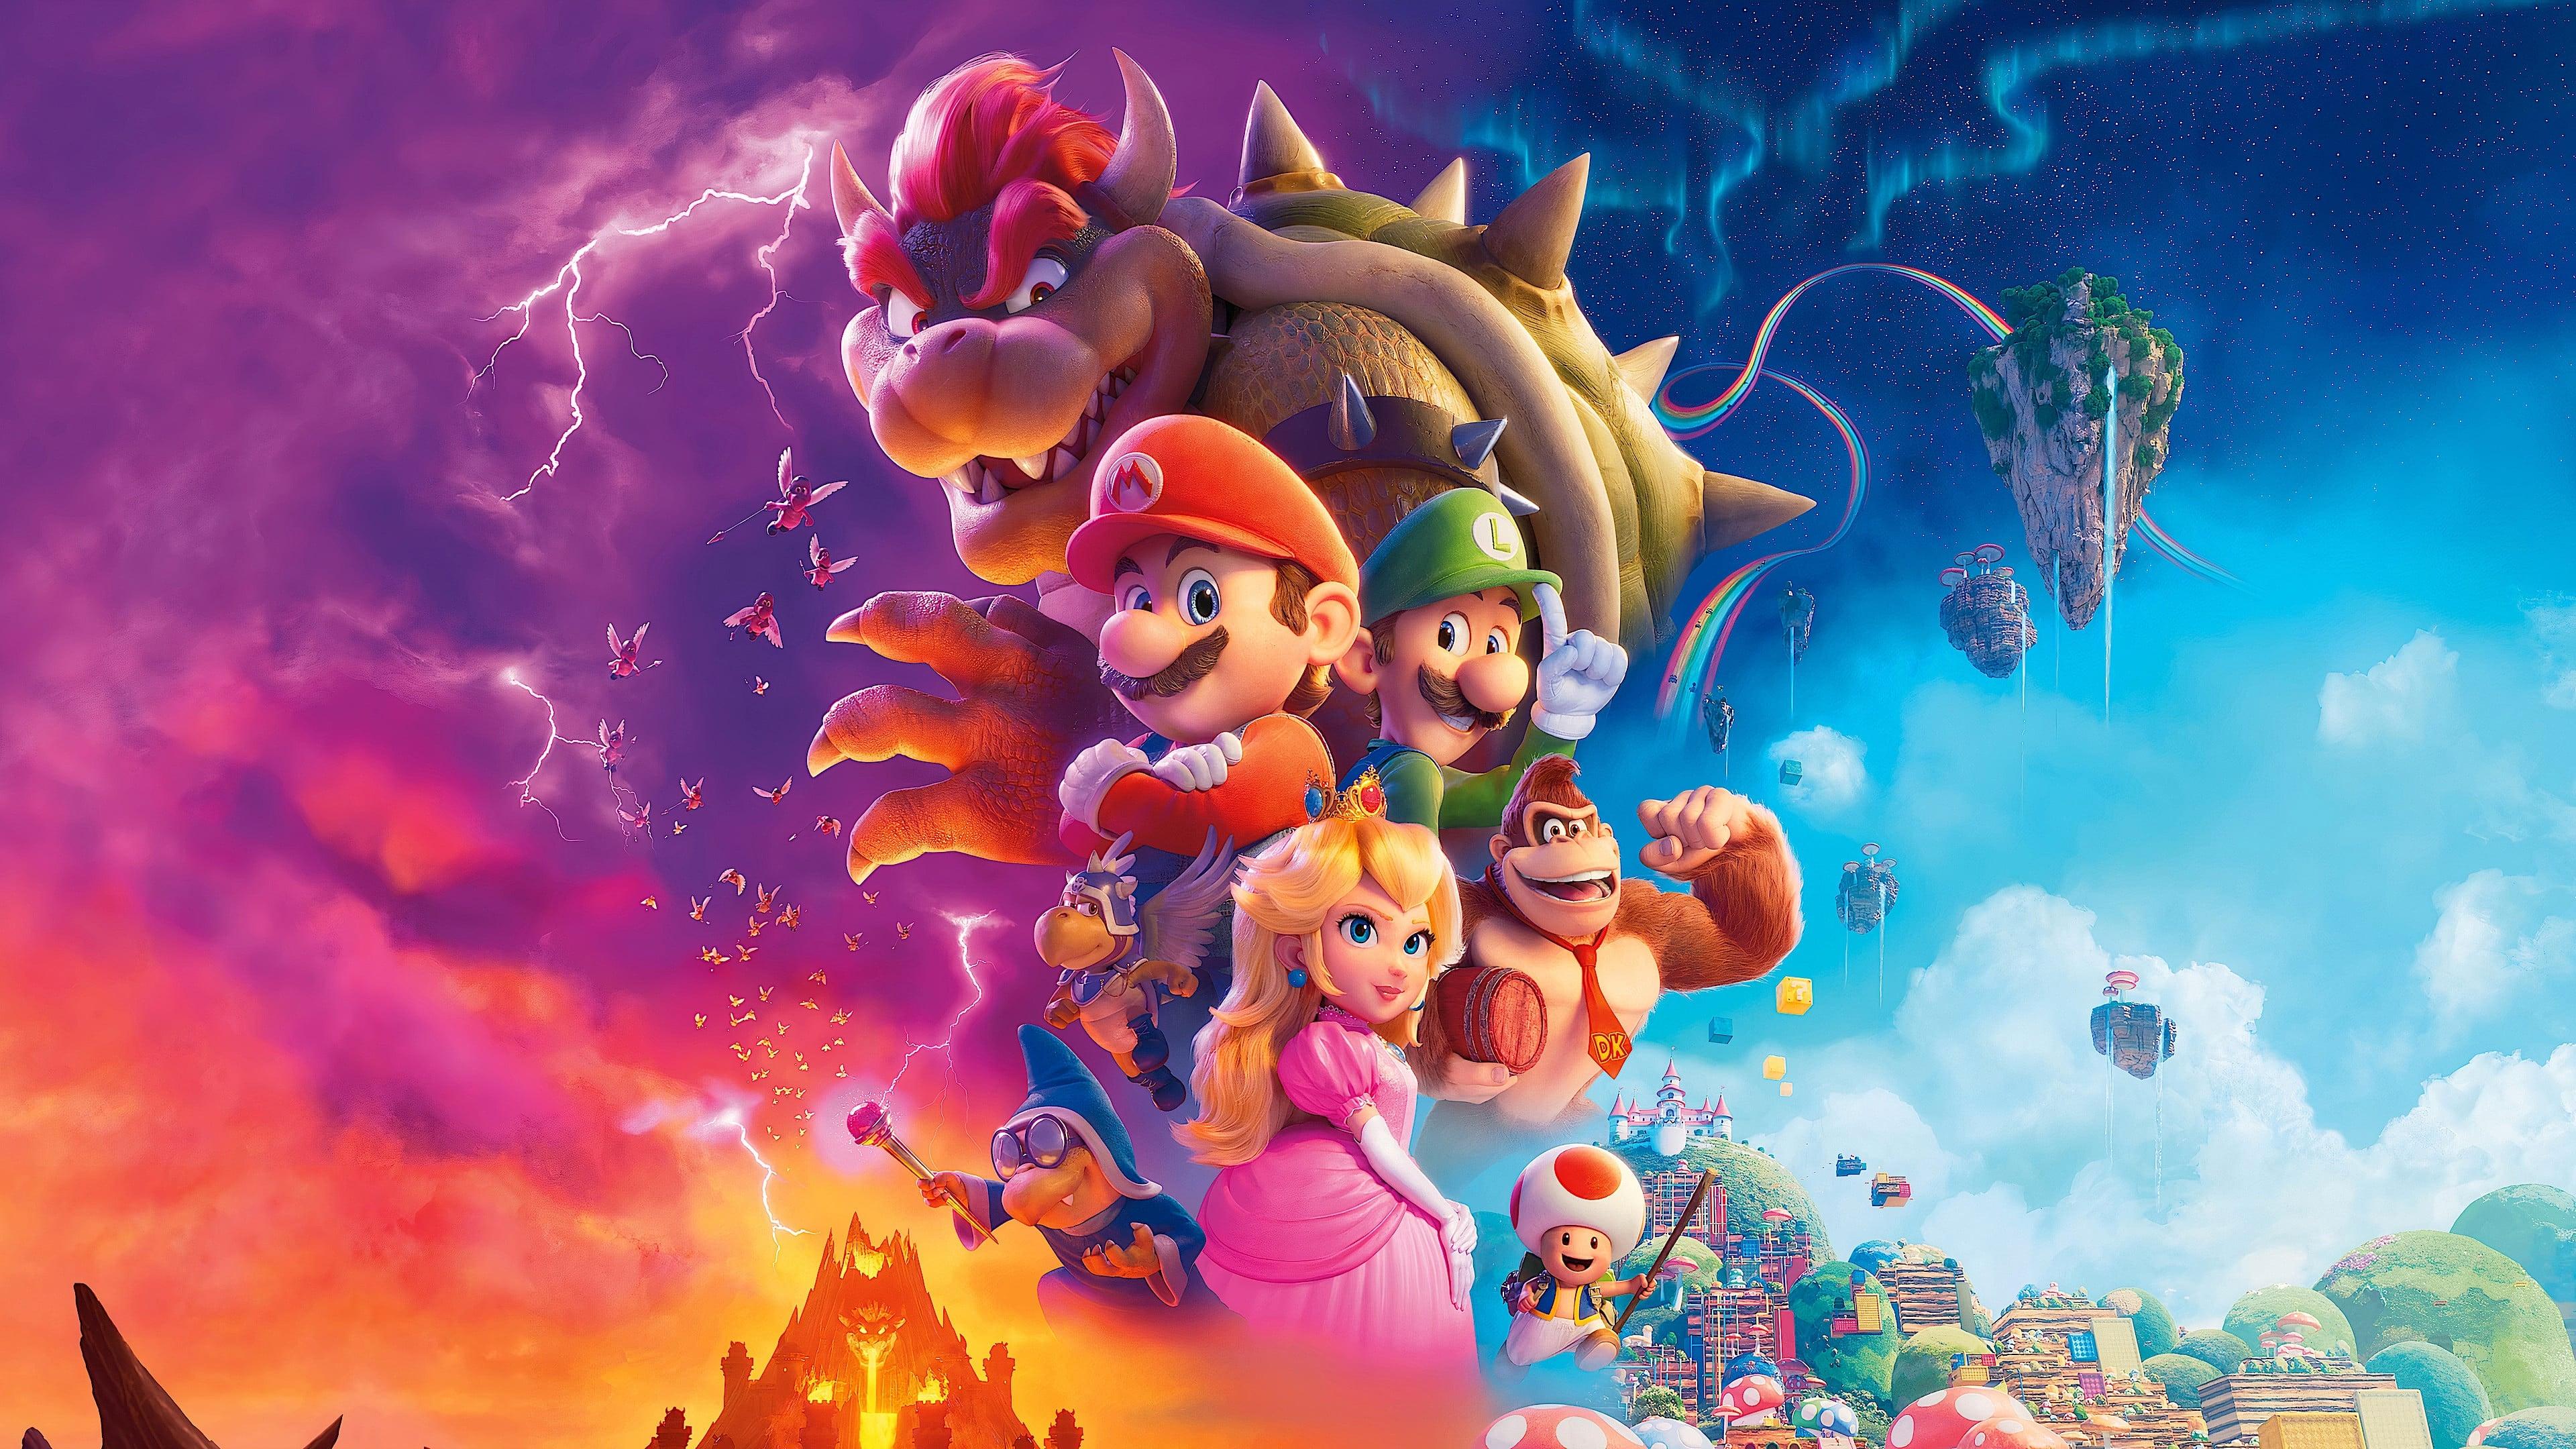 movie poster for The Super Mario Bros. Movie